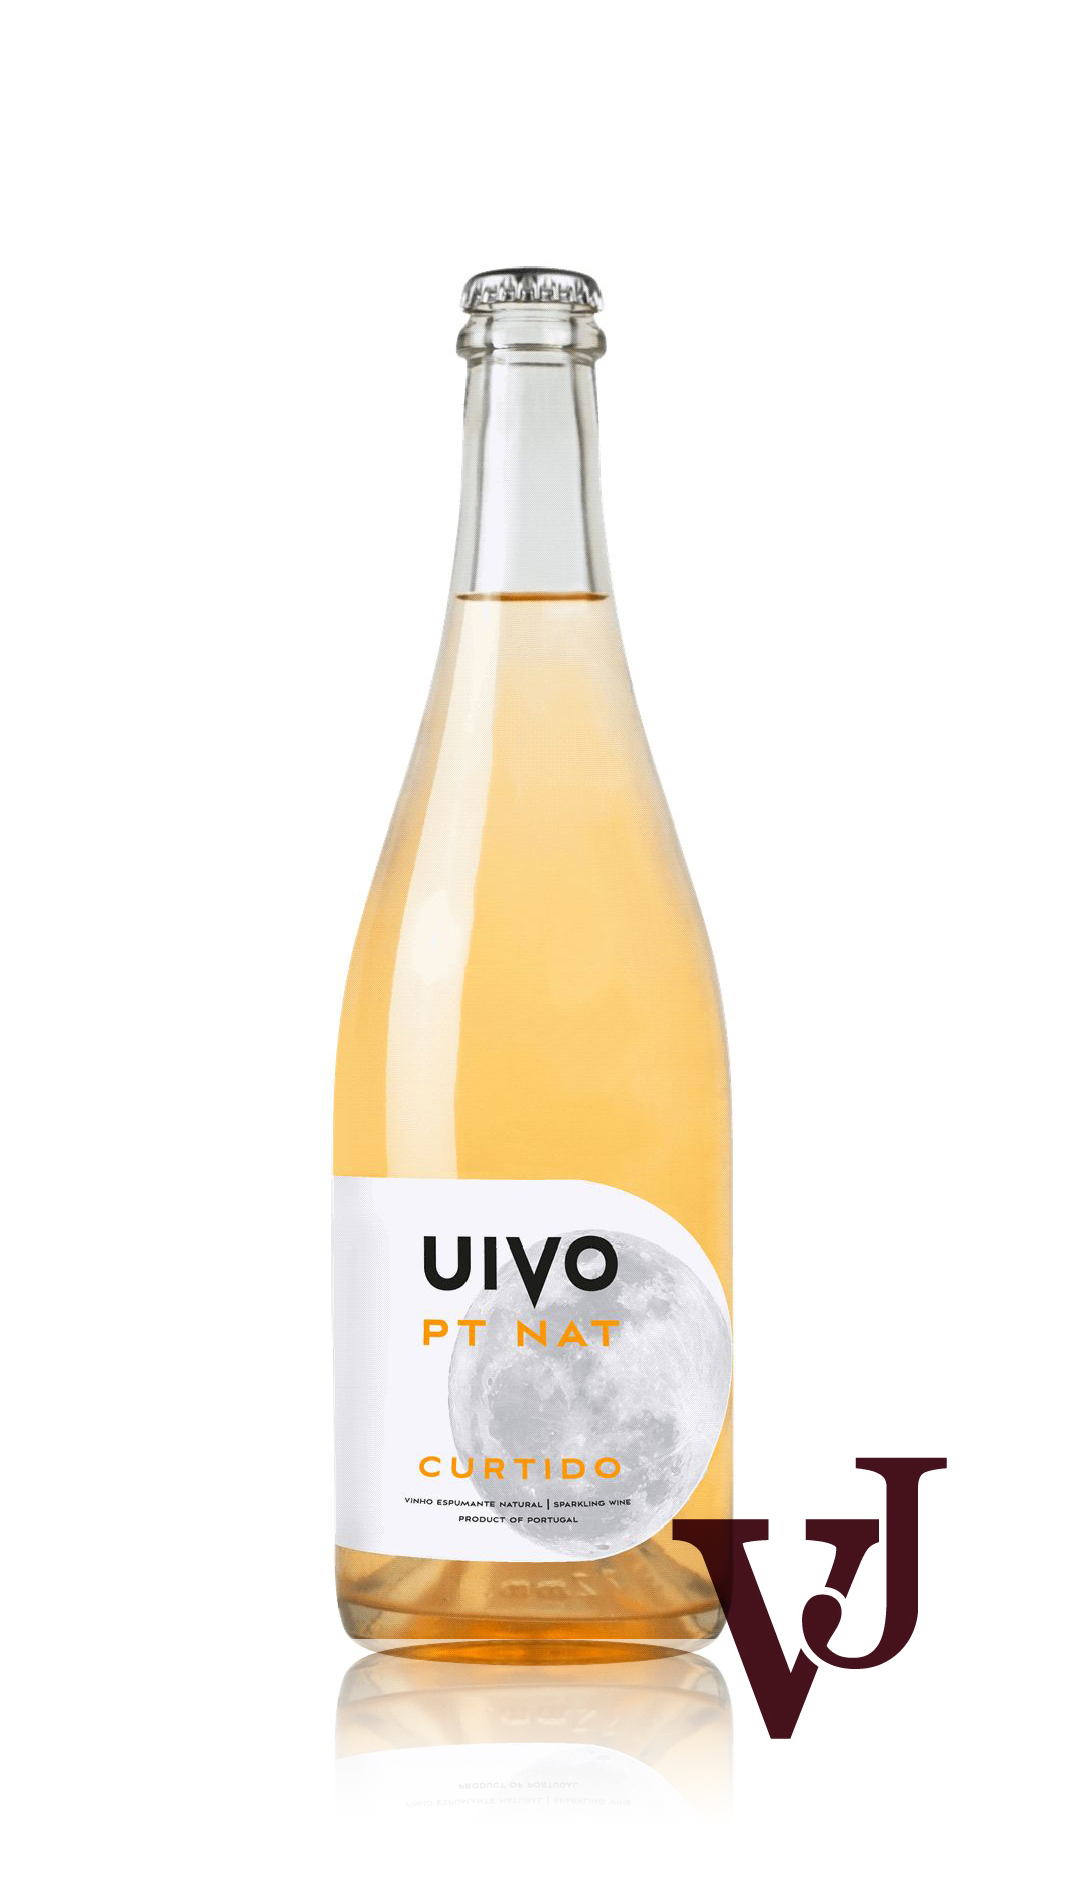 Mousserande Vin - Uivo Pt Nat Curtido Folias de Baco 2022 artikel nummer 9506401 från producenten Folias de Baco från Portugal.